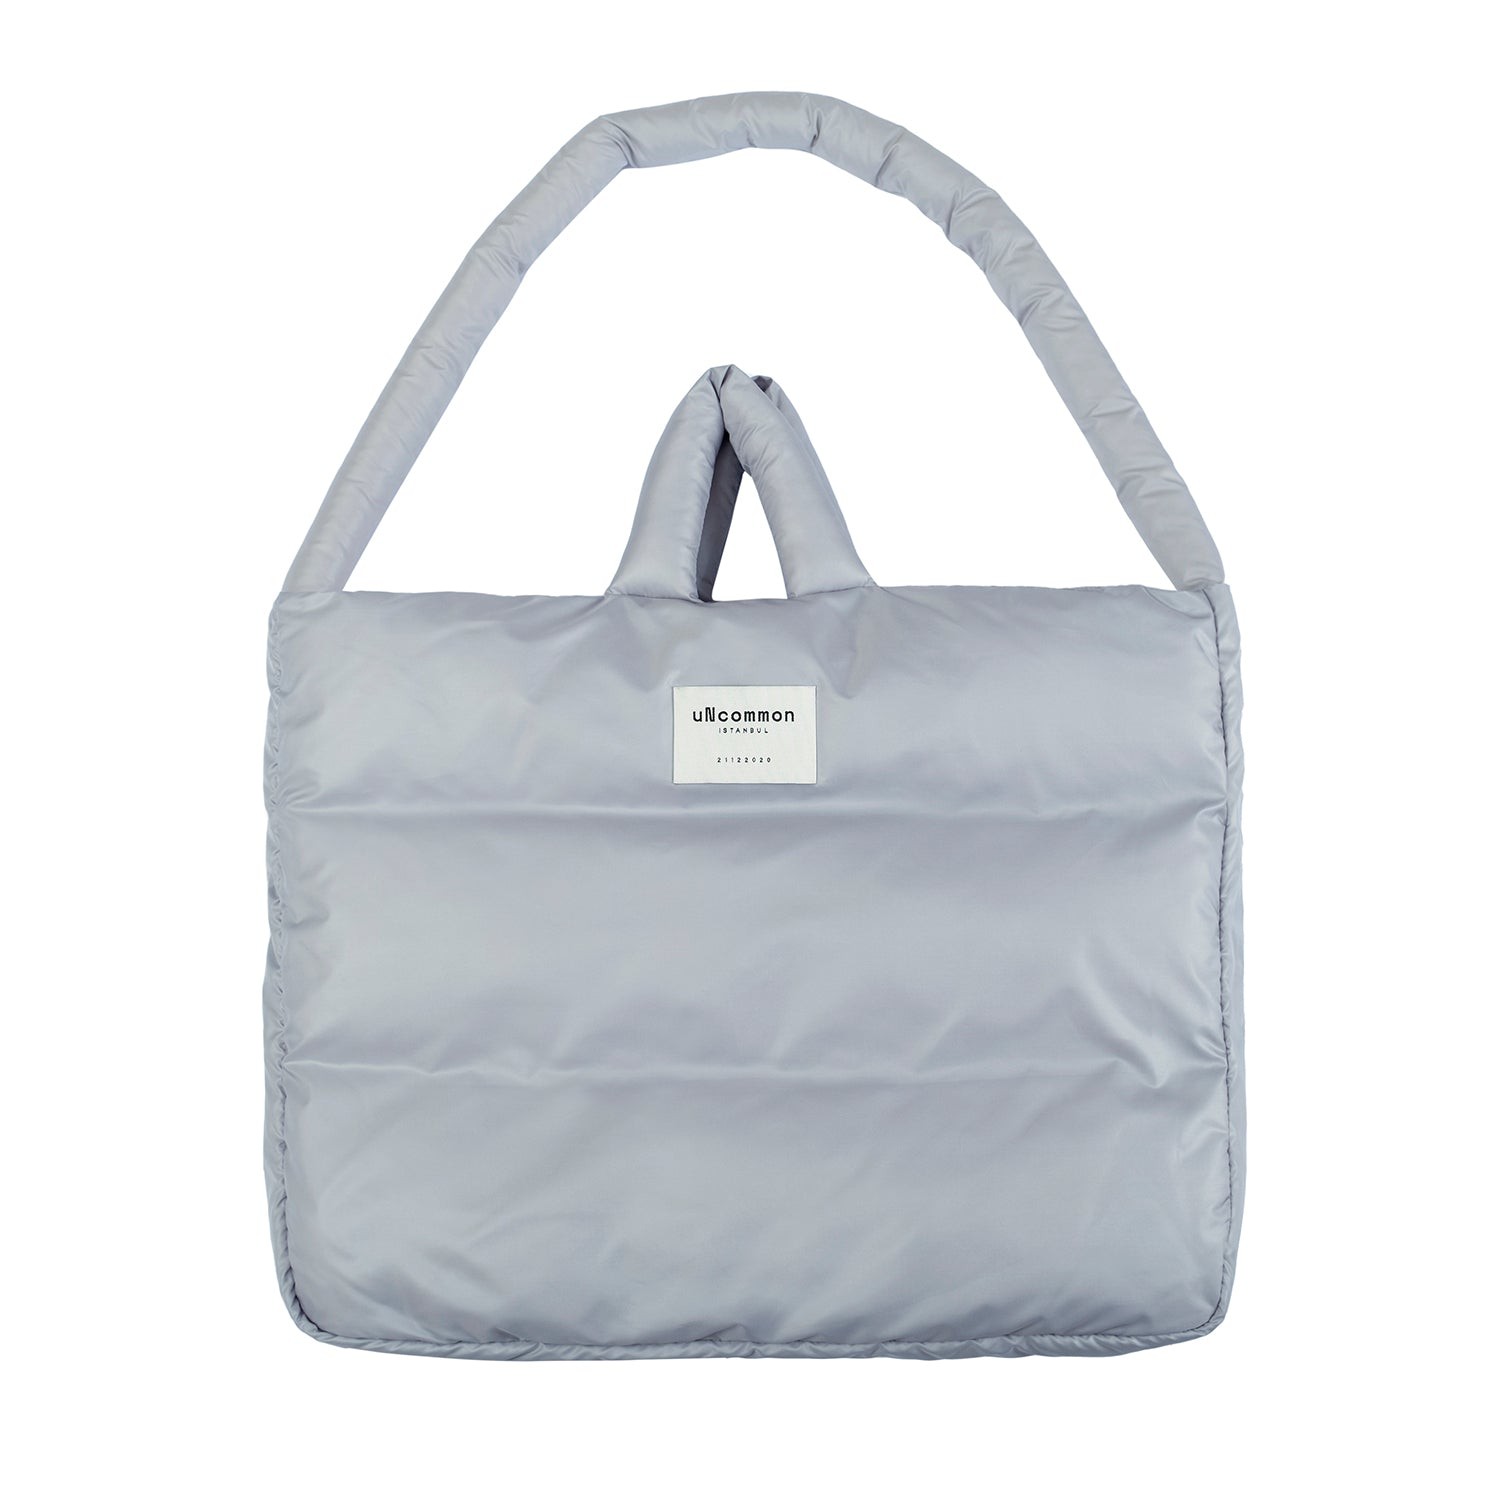 uNcommon Puffy Tote Bag Gray